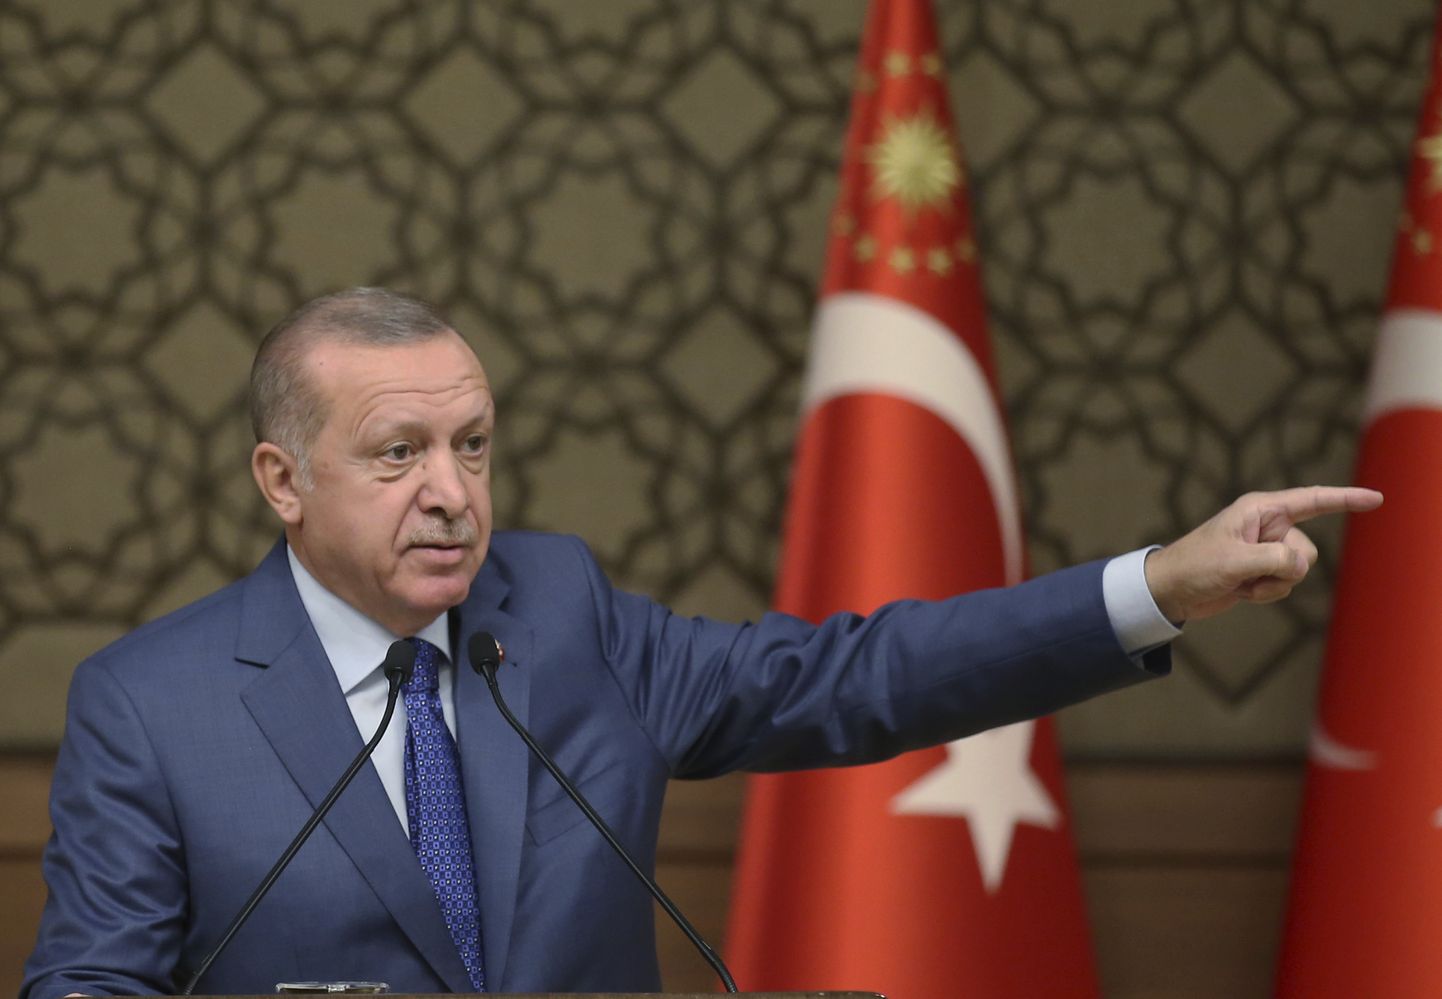 Türgi president Recep Tayyip Erdoğan täna kõnet pidamas.